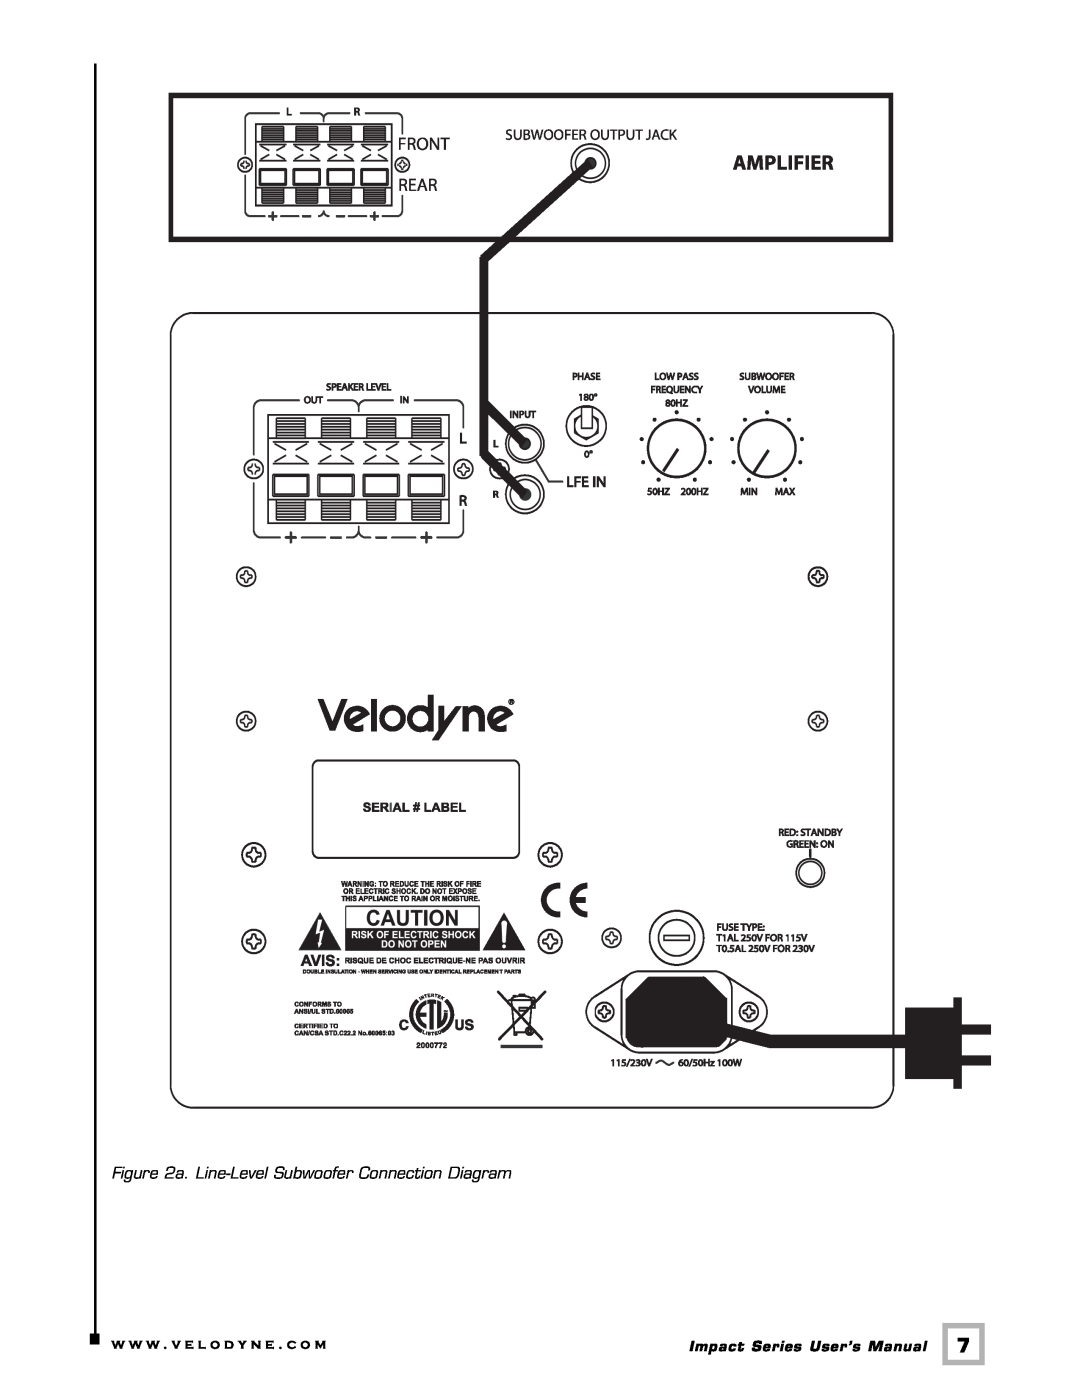 Velodyne Acoustics MINI, 12, 10 user manual Rear, a. Line-LevelSubwoofer Connection Diagram, Front, Subwoofer Output Jack 